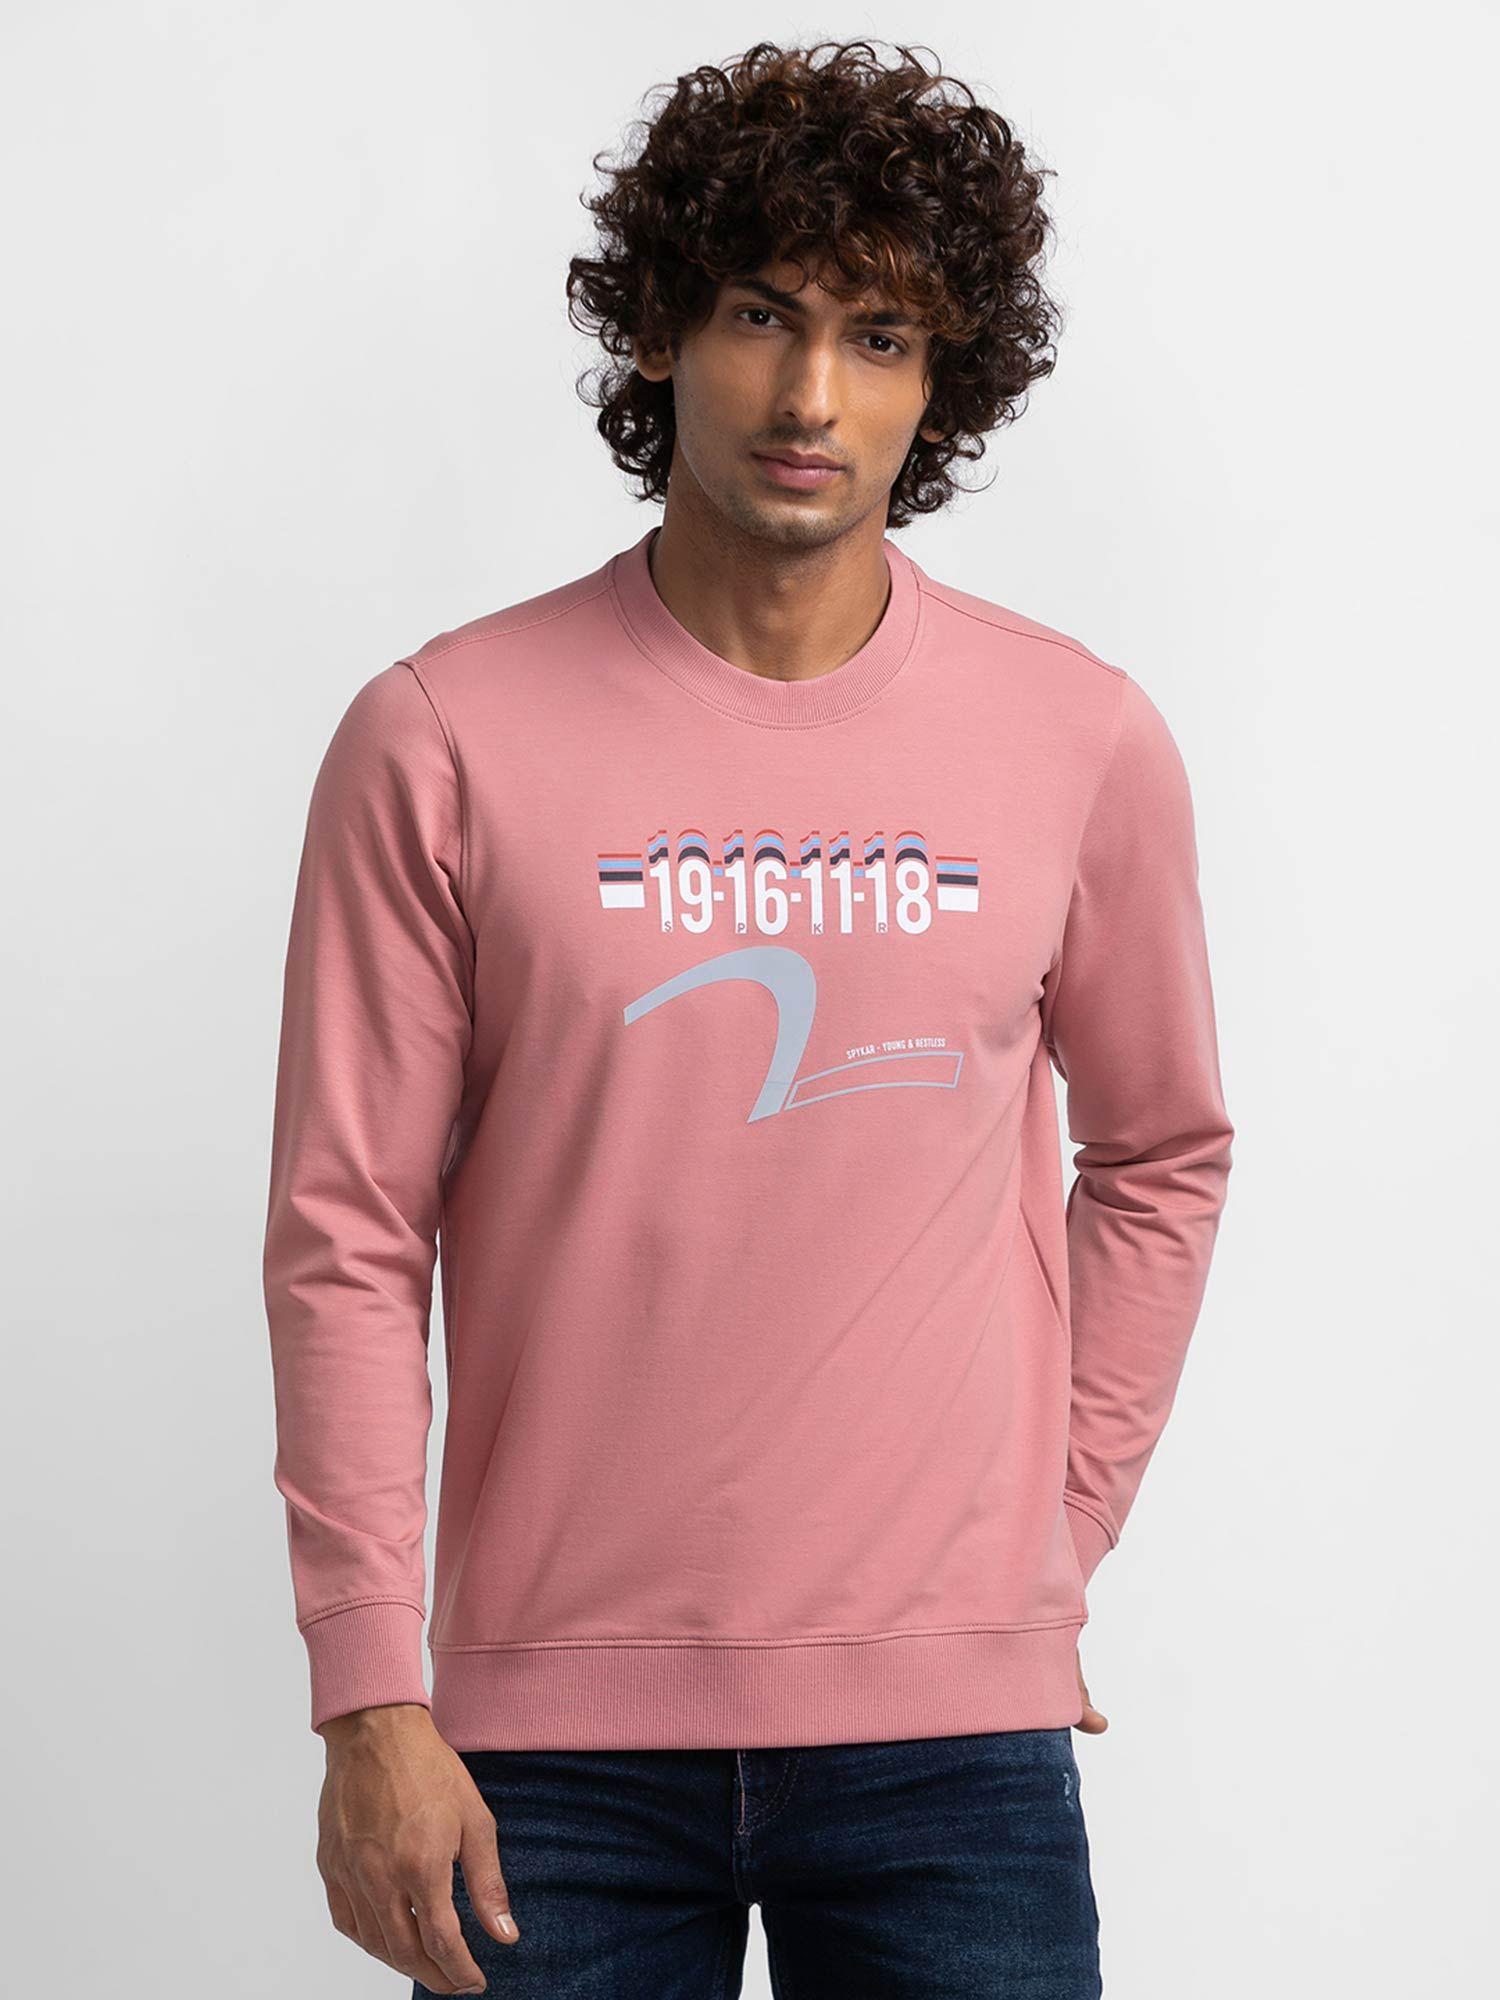 dusty pink cotton full sleeve round neck sweatshirt for men